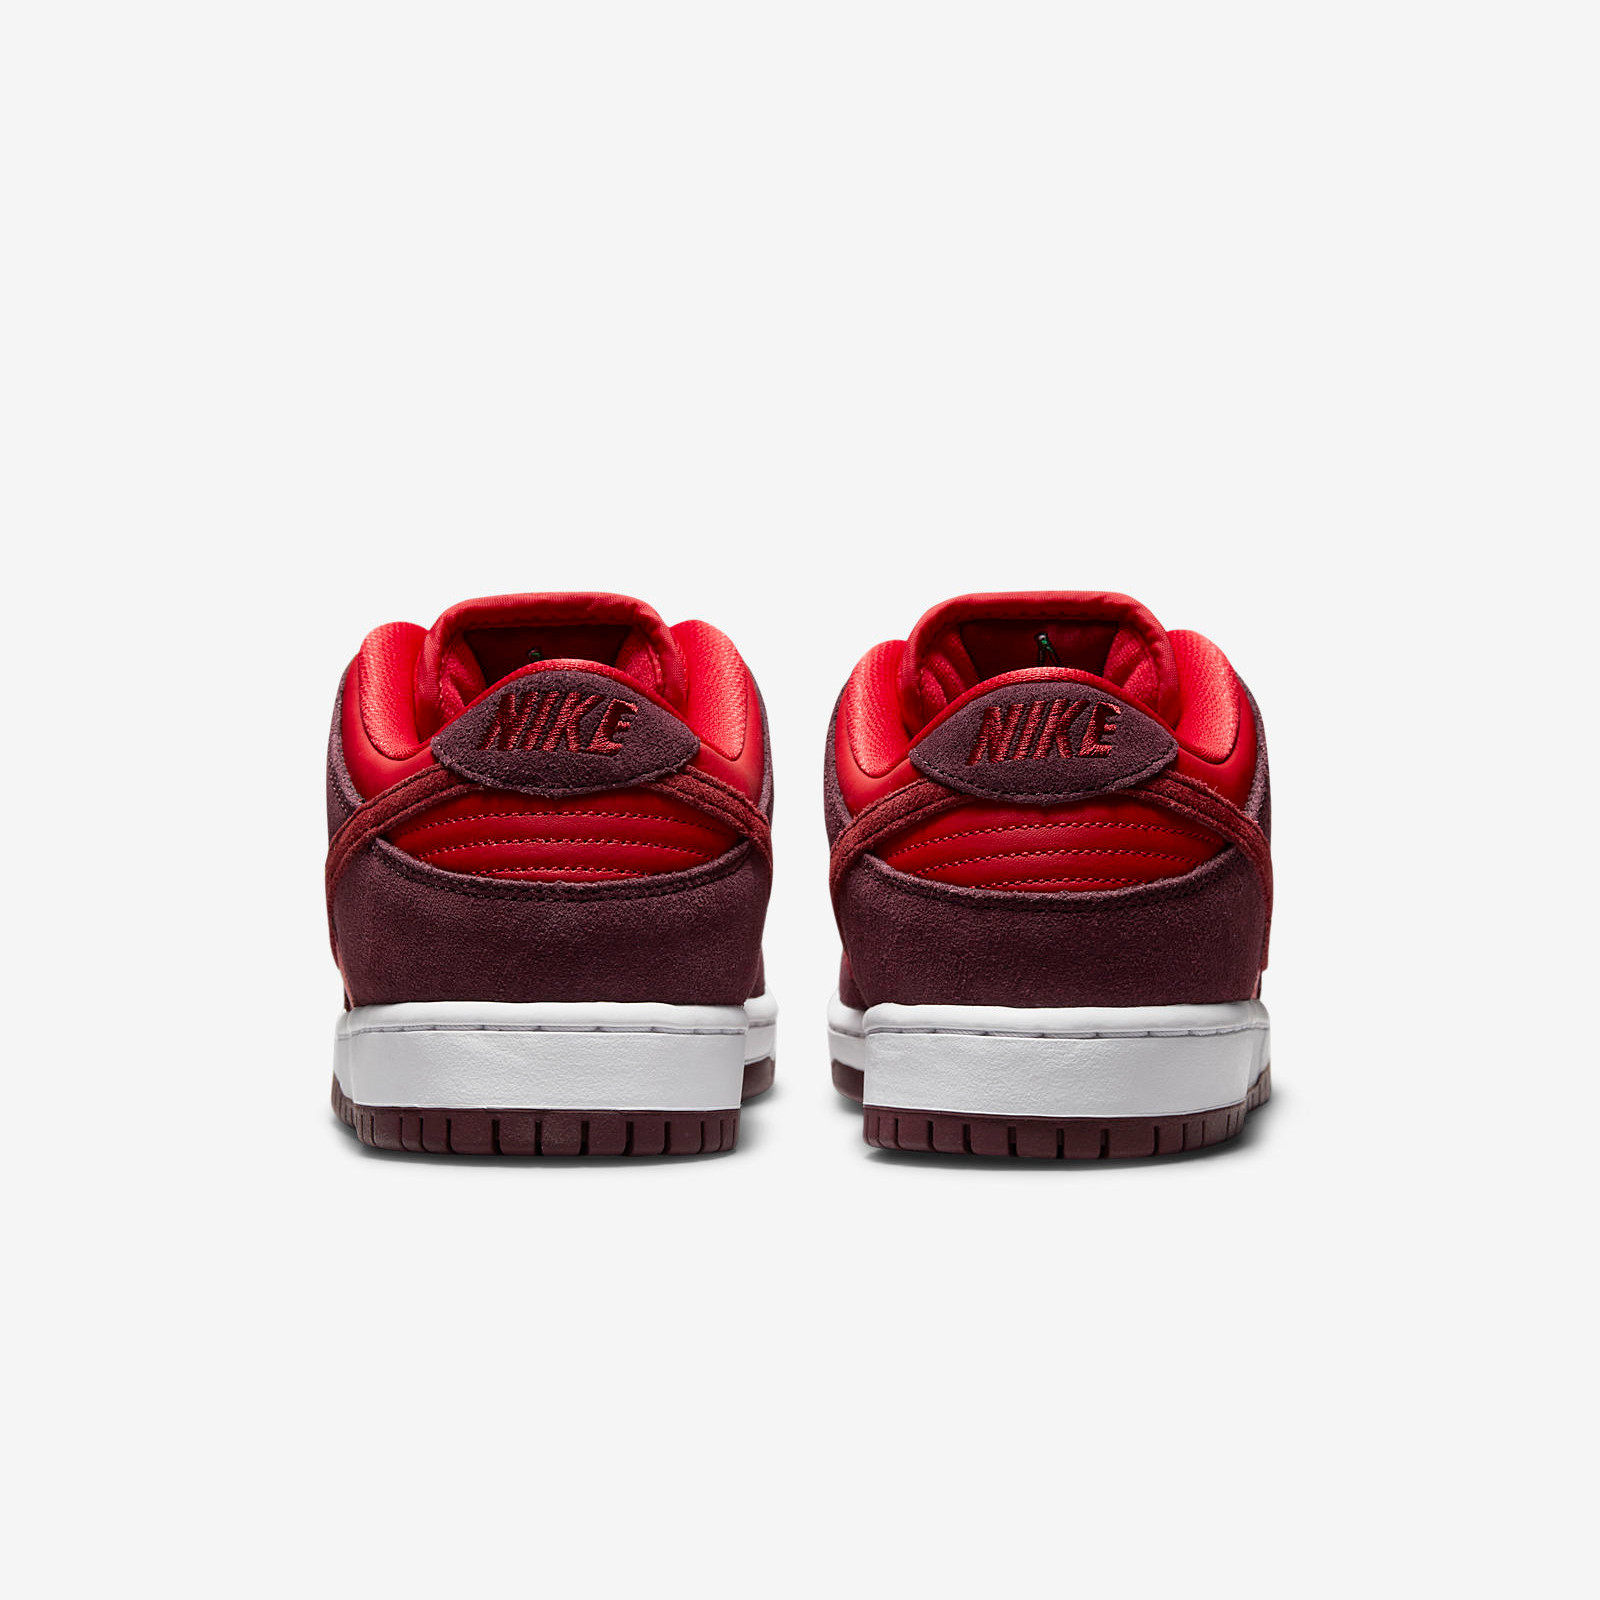 Nike SB Dunk Low
« Cherry »